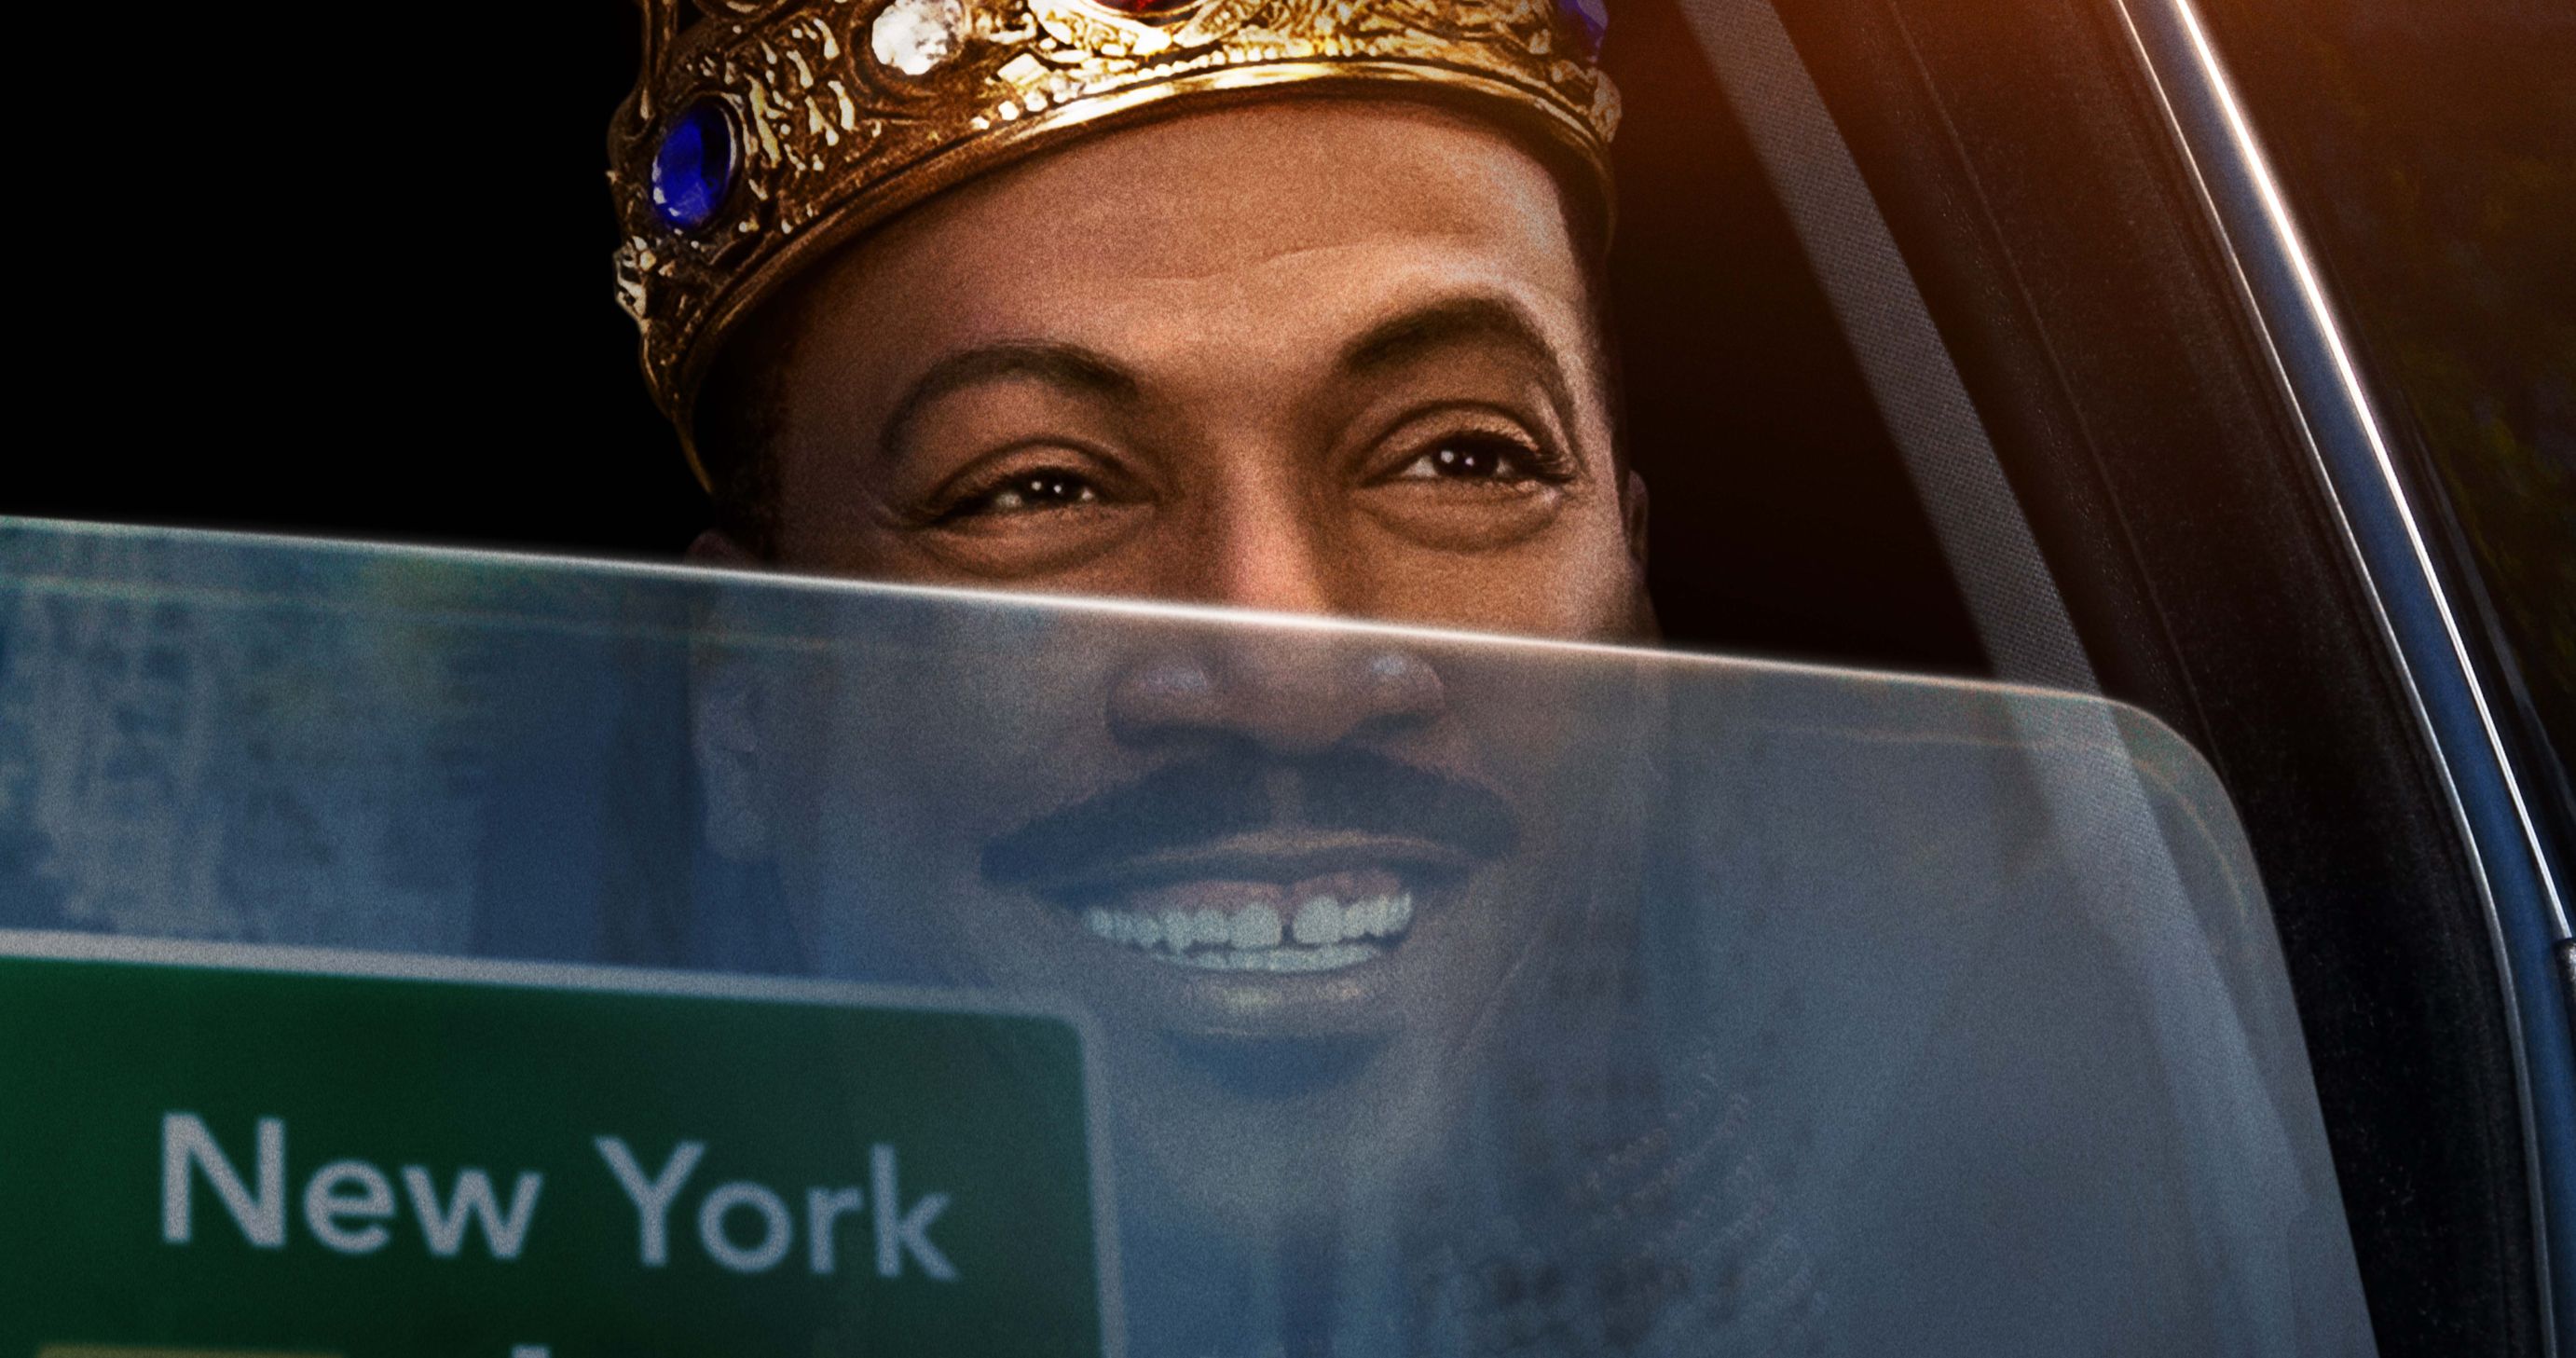 Coming 2 America Poster Brings Eddie Murphy's King Akeem Back to New York